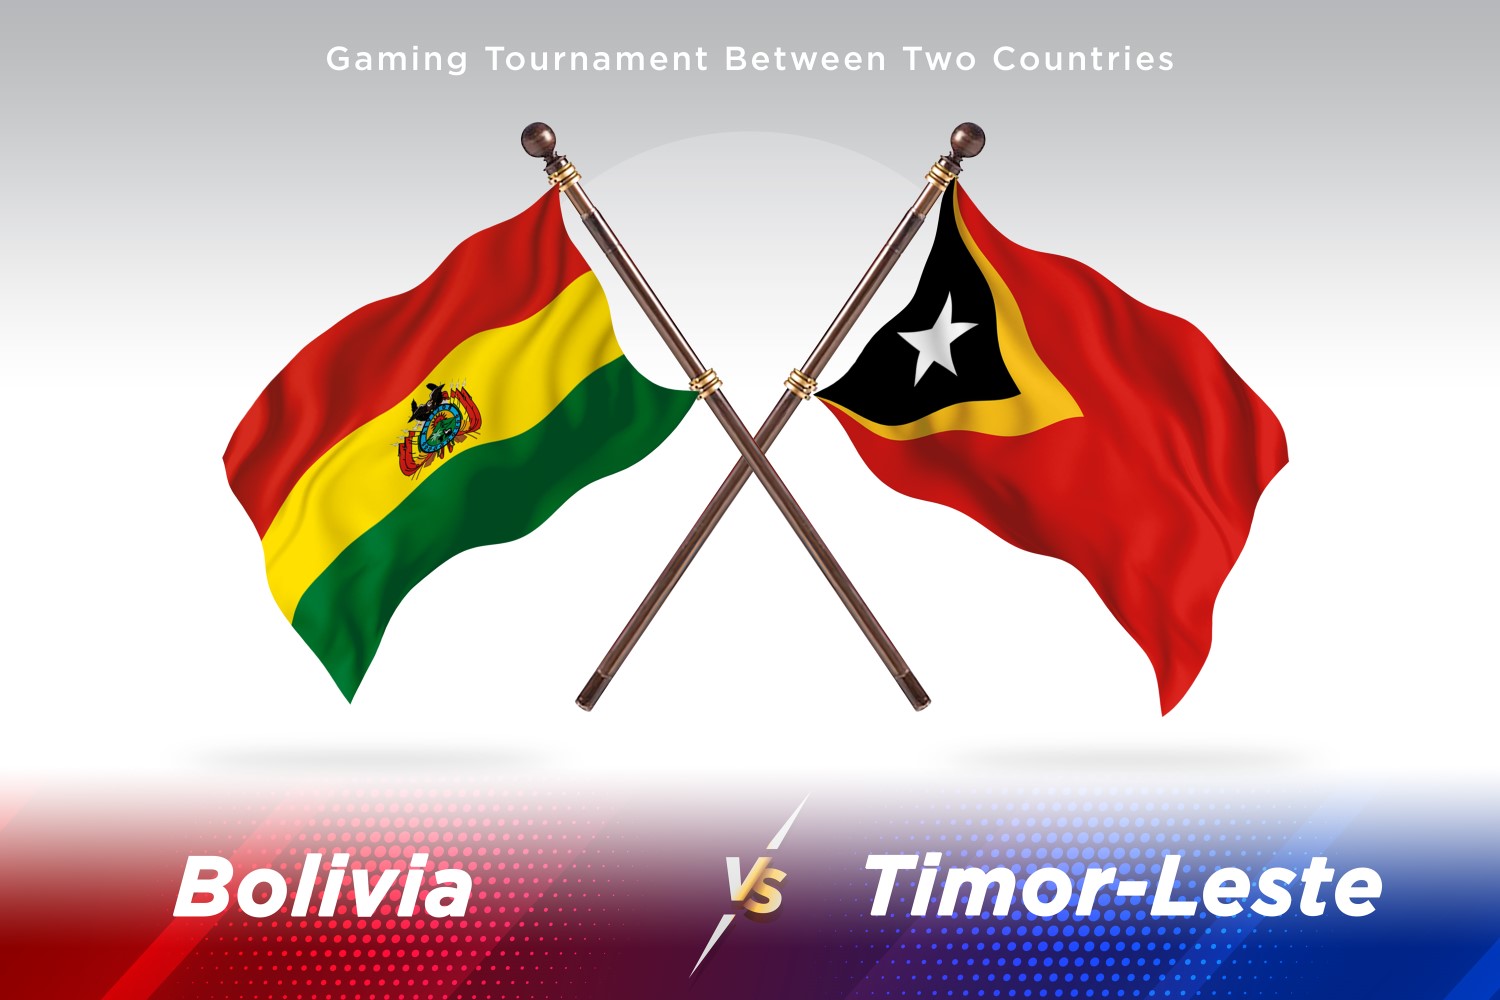 Bolivia versus Timor-Leste Two Flags